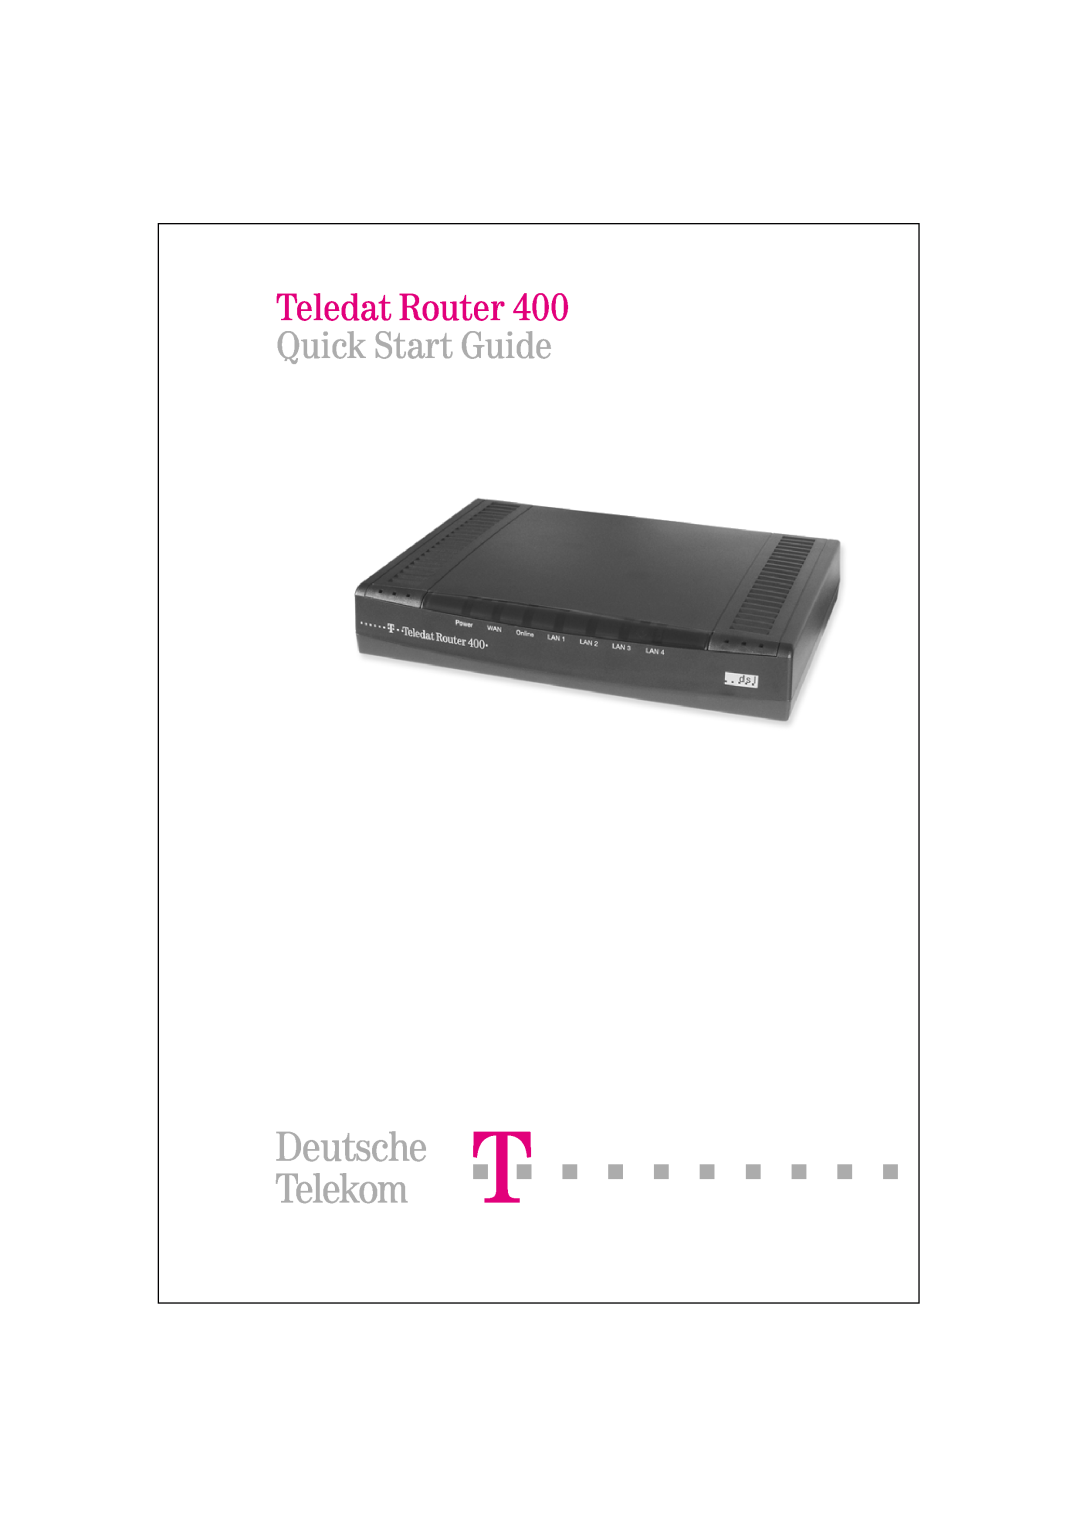 Deutsche Telekom 400 quick start Deutsche, Telekom, Teledat Router, Quick Start Guide 